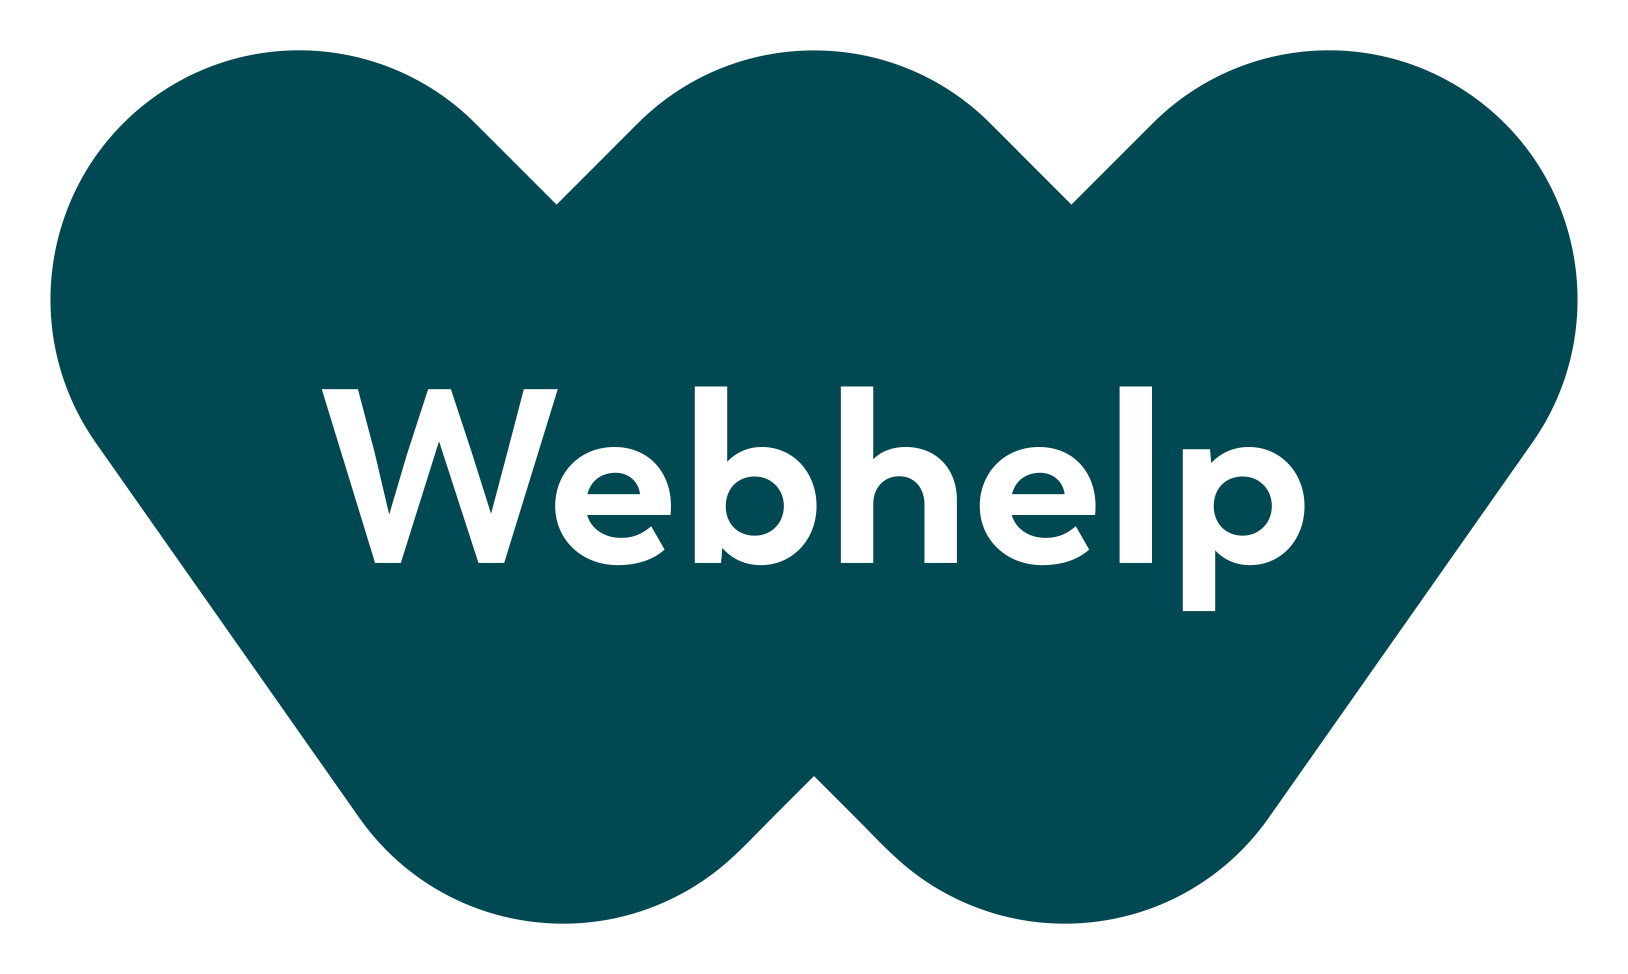 New Logo and Identity for Webhelp by Futurebrand